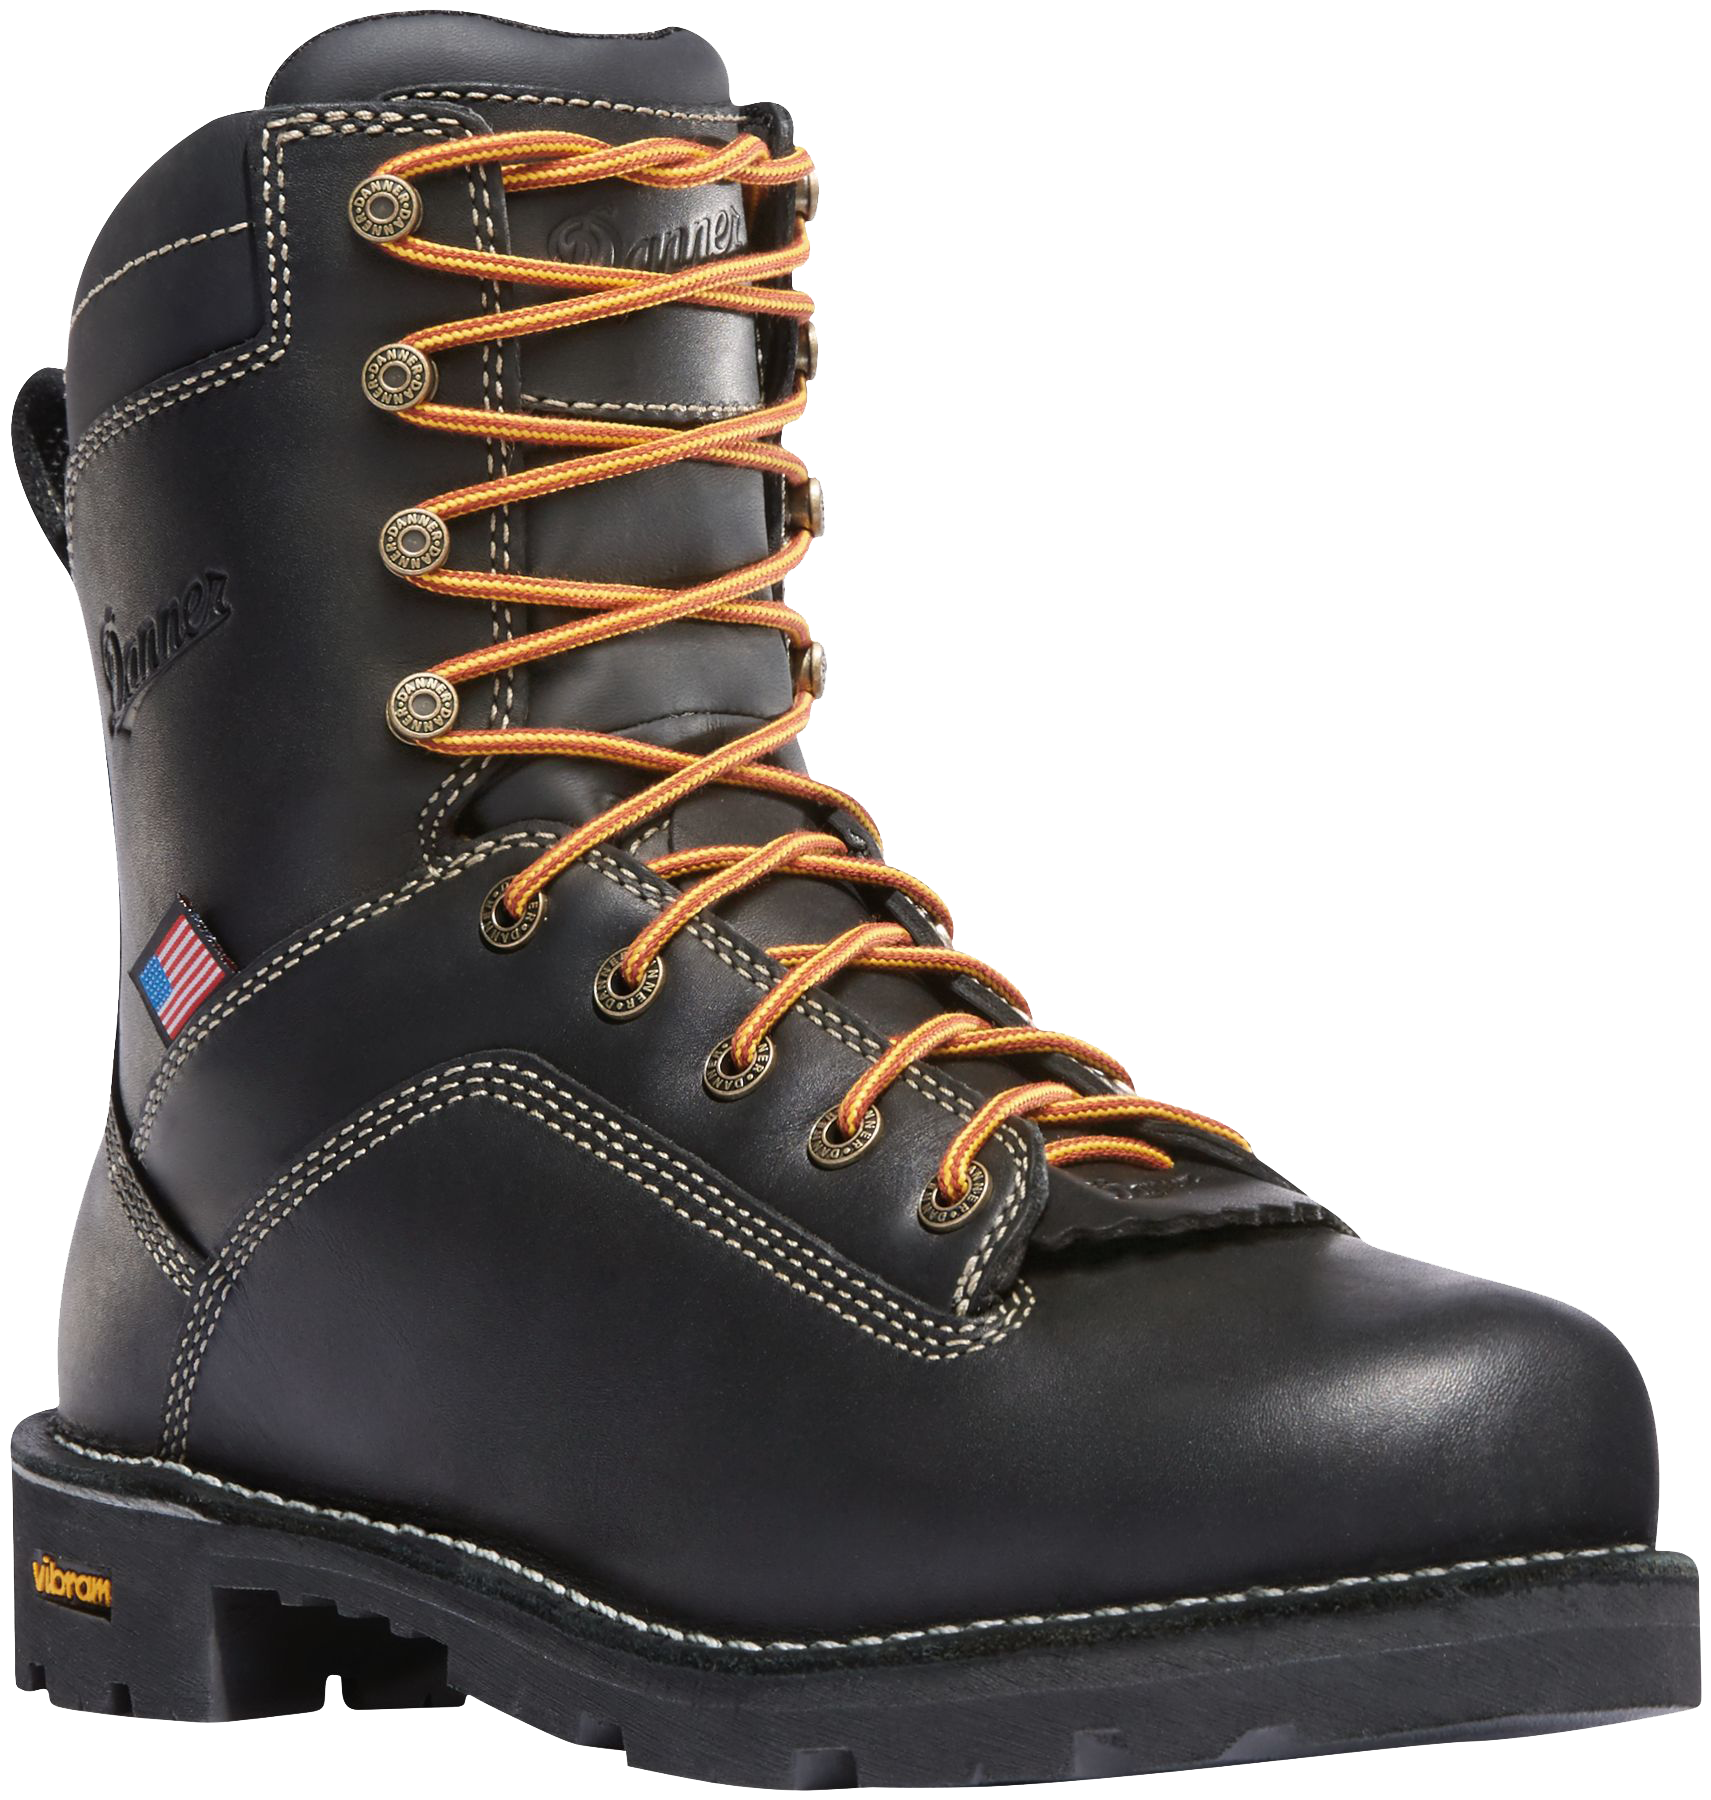 Danner Quarry USA GORE-TEX Work Boots for Men - Black - 8M